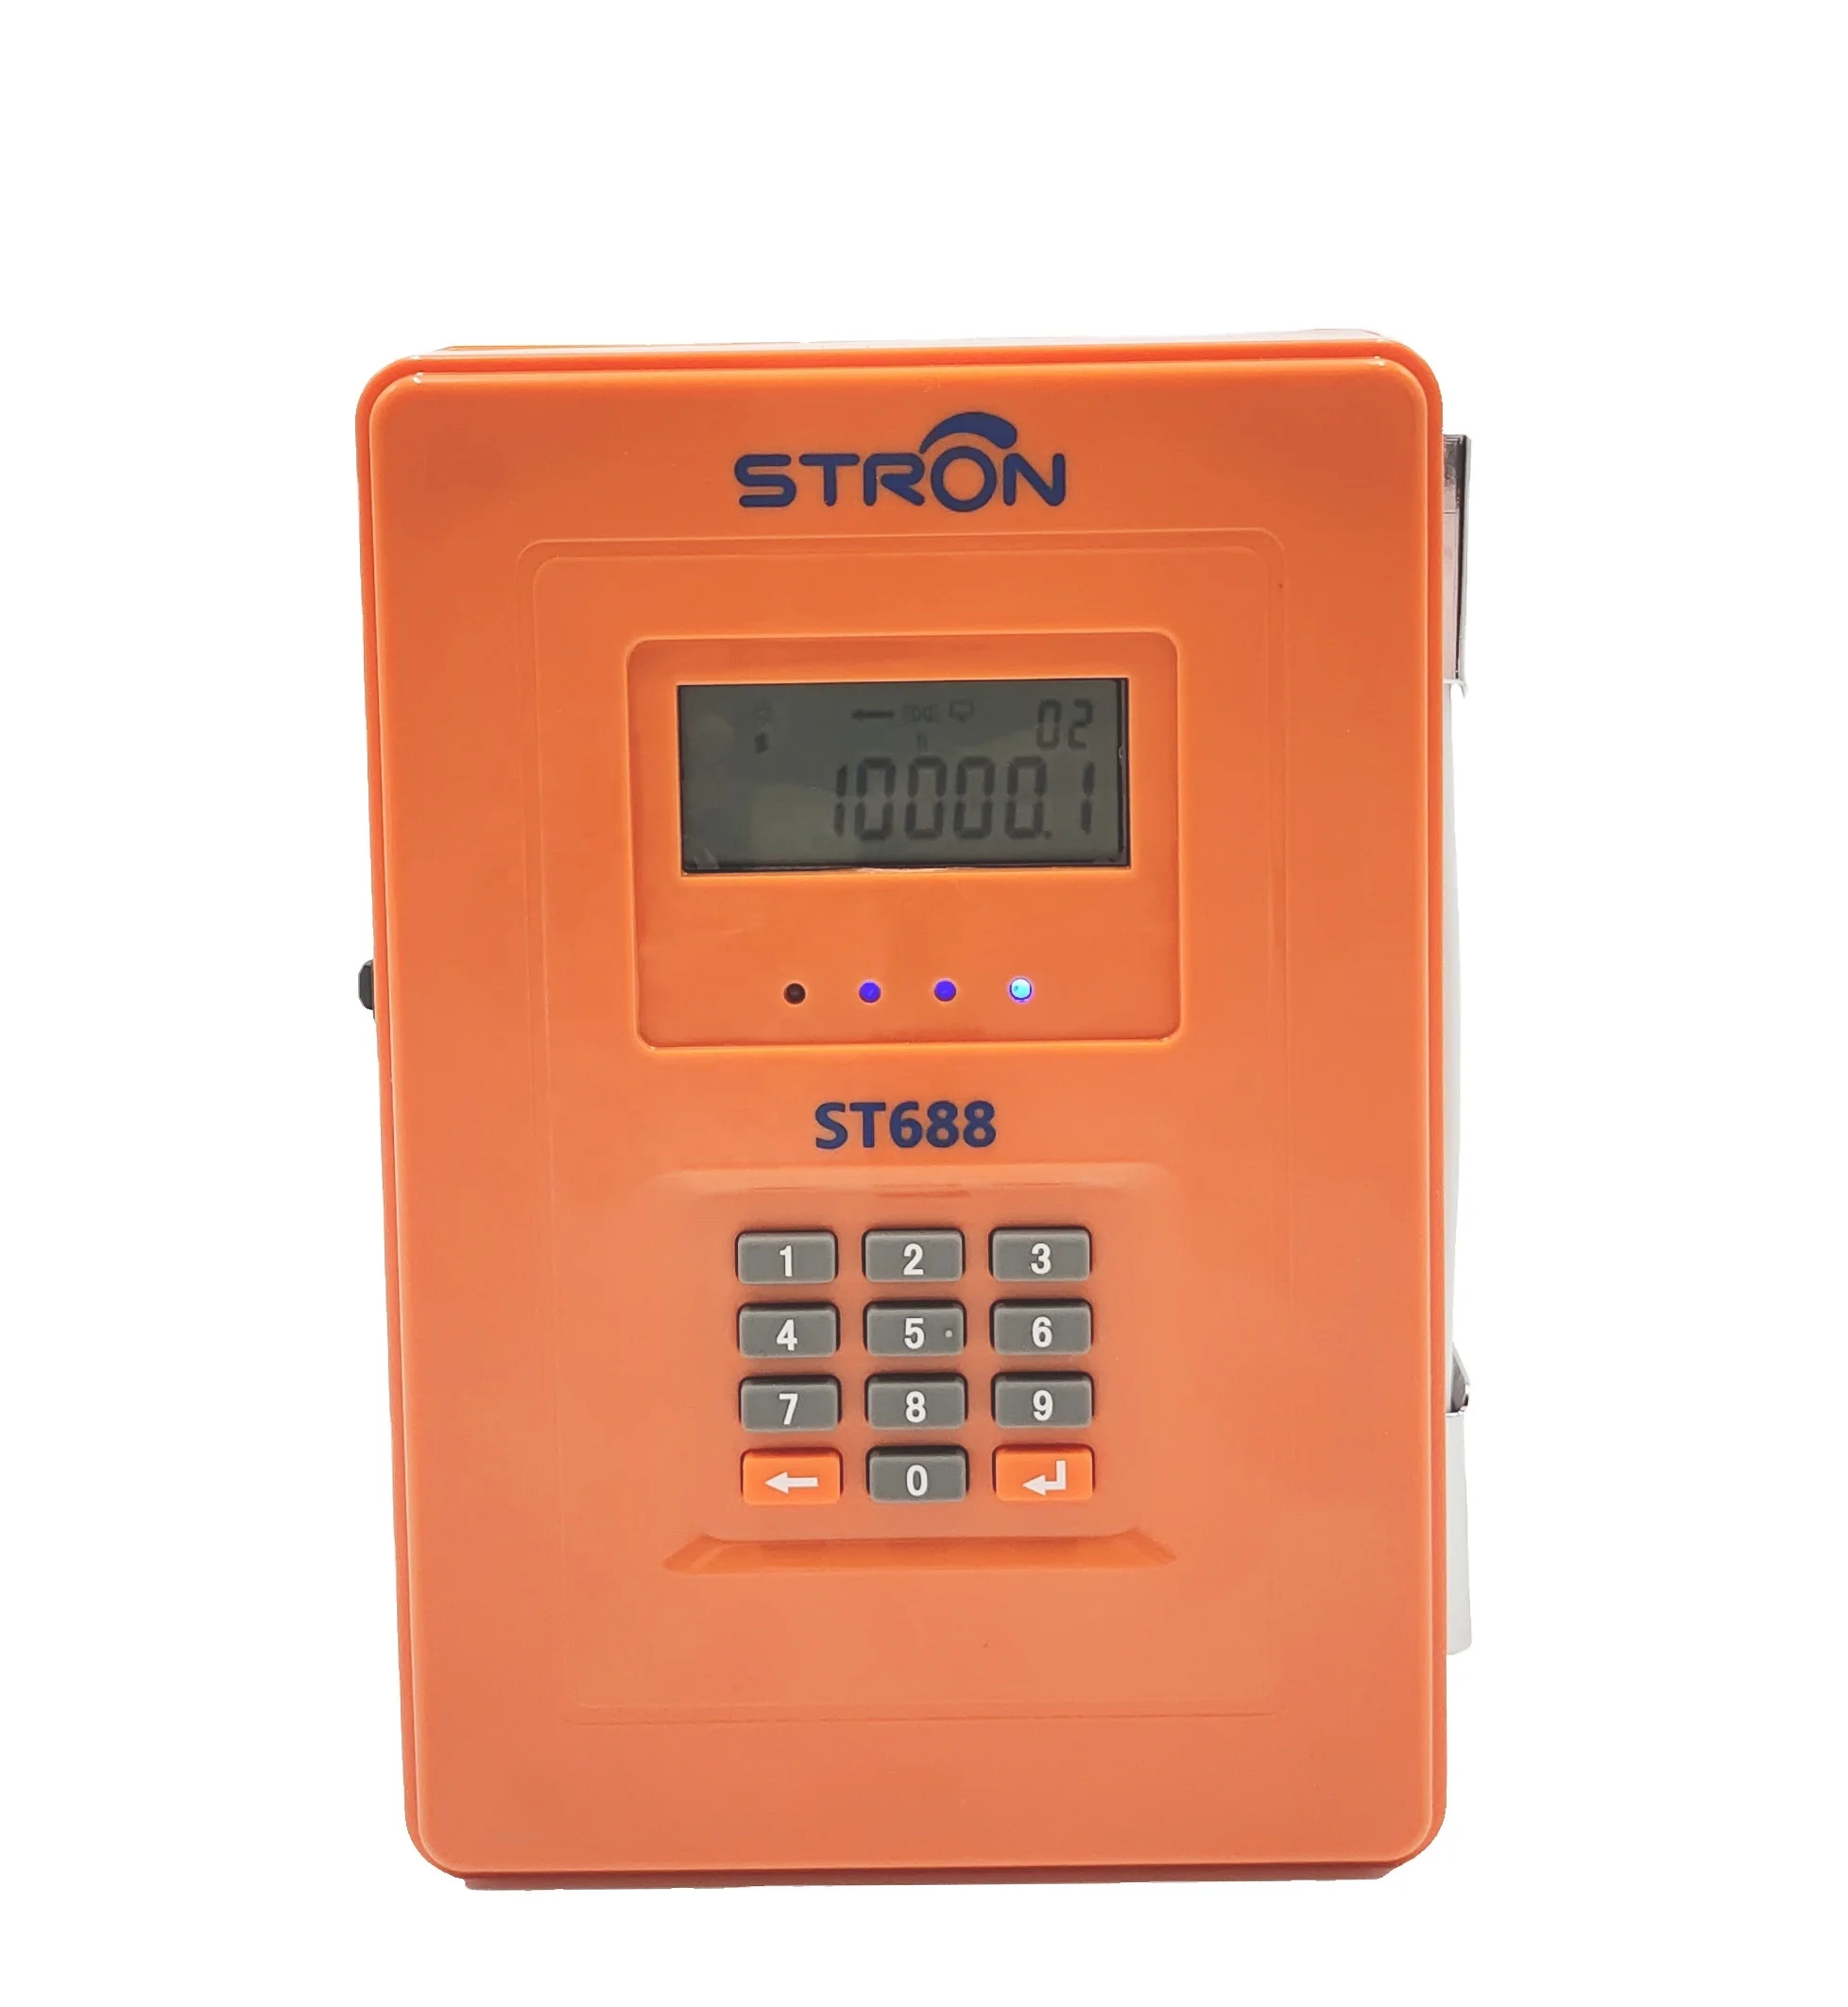 ST688 Smart Data Concentrator Unit - Famidy.com